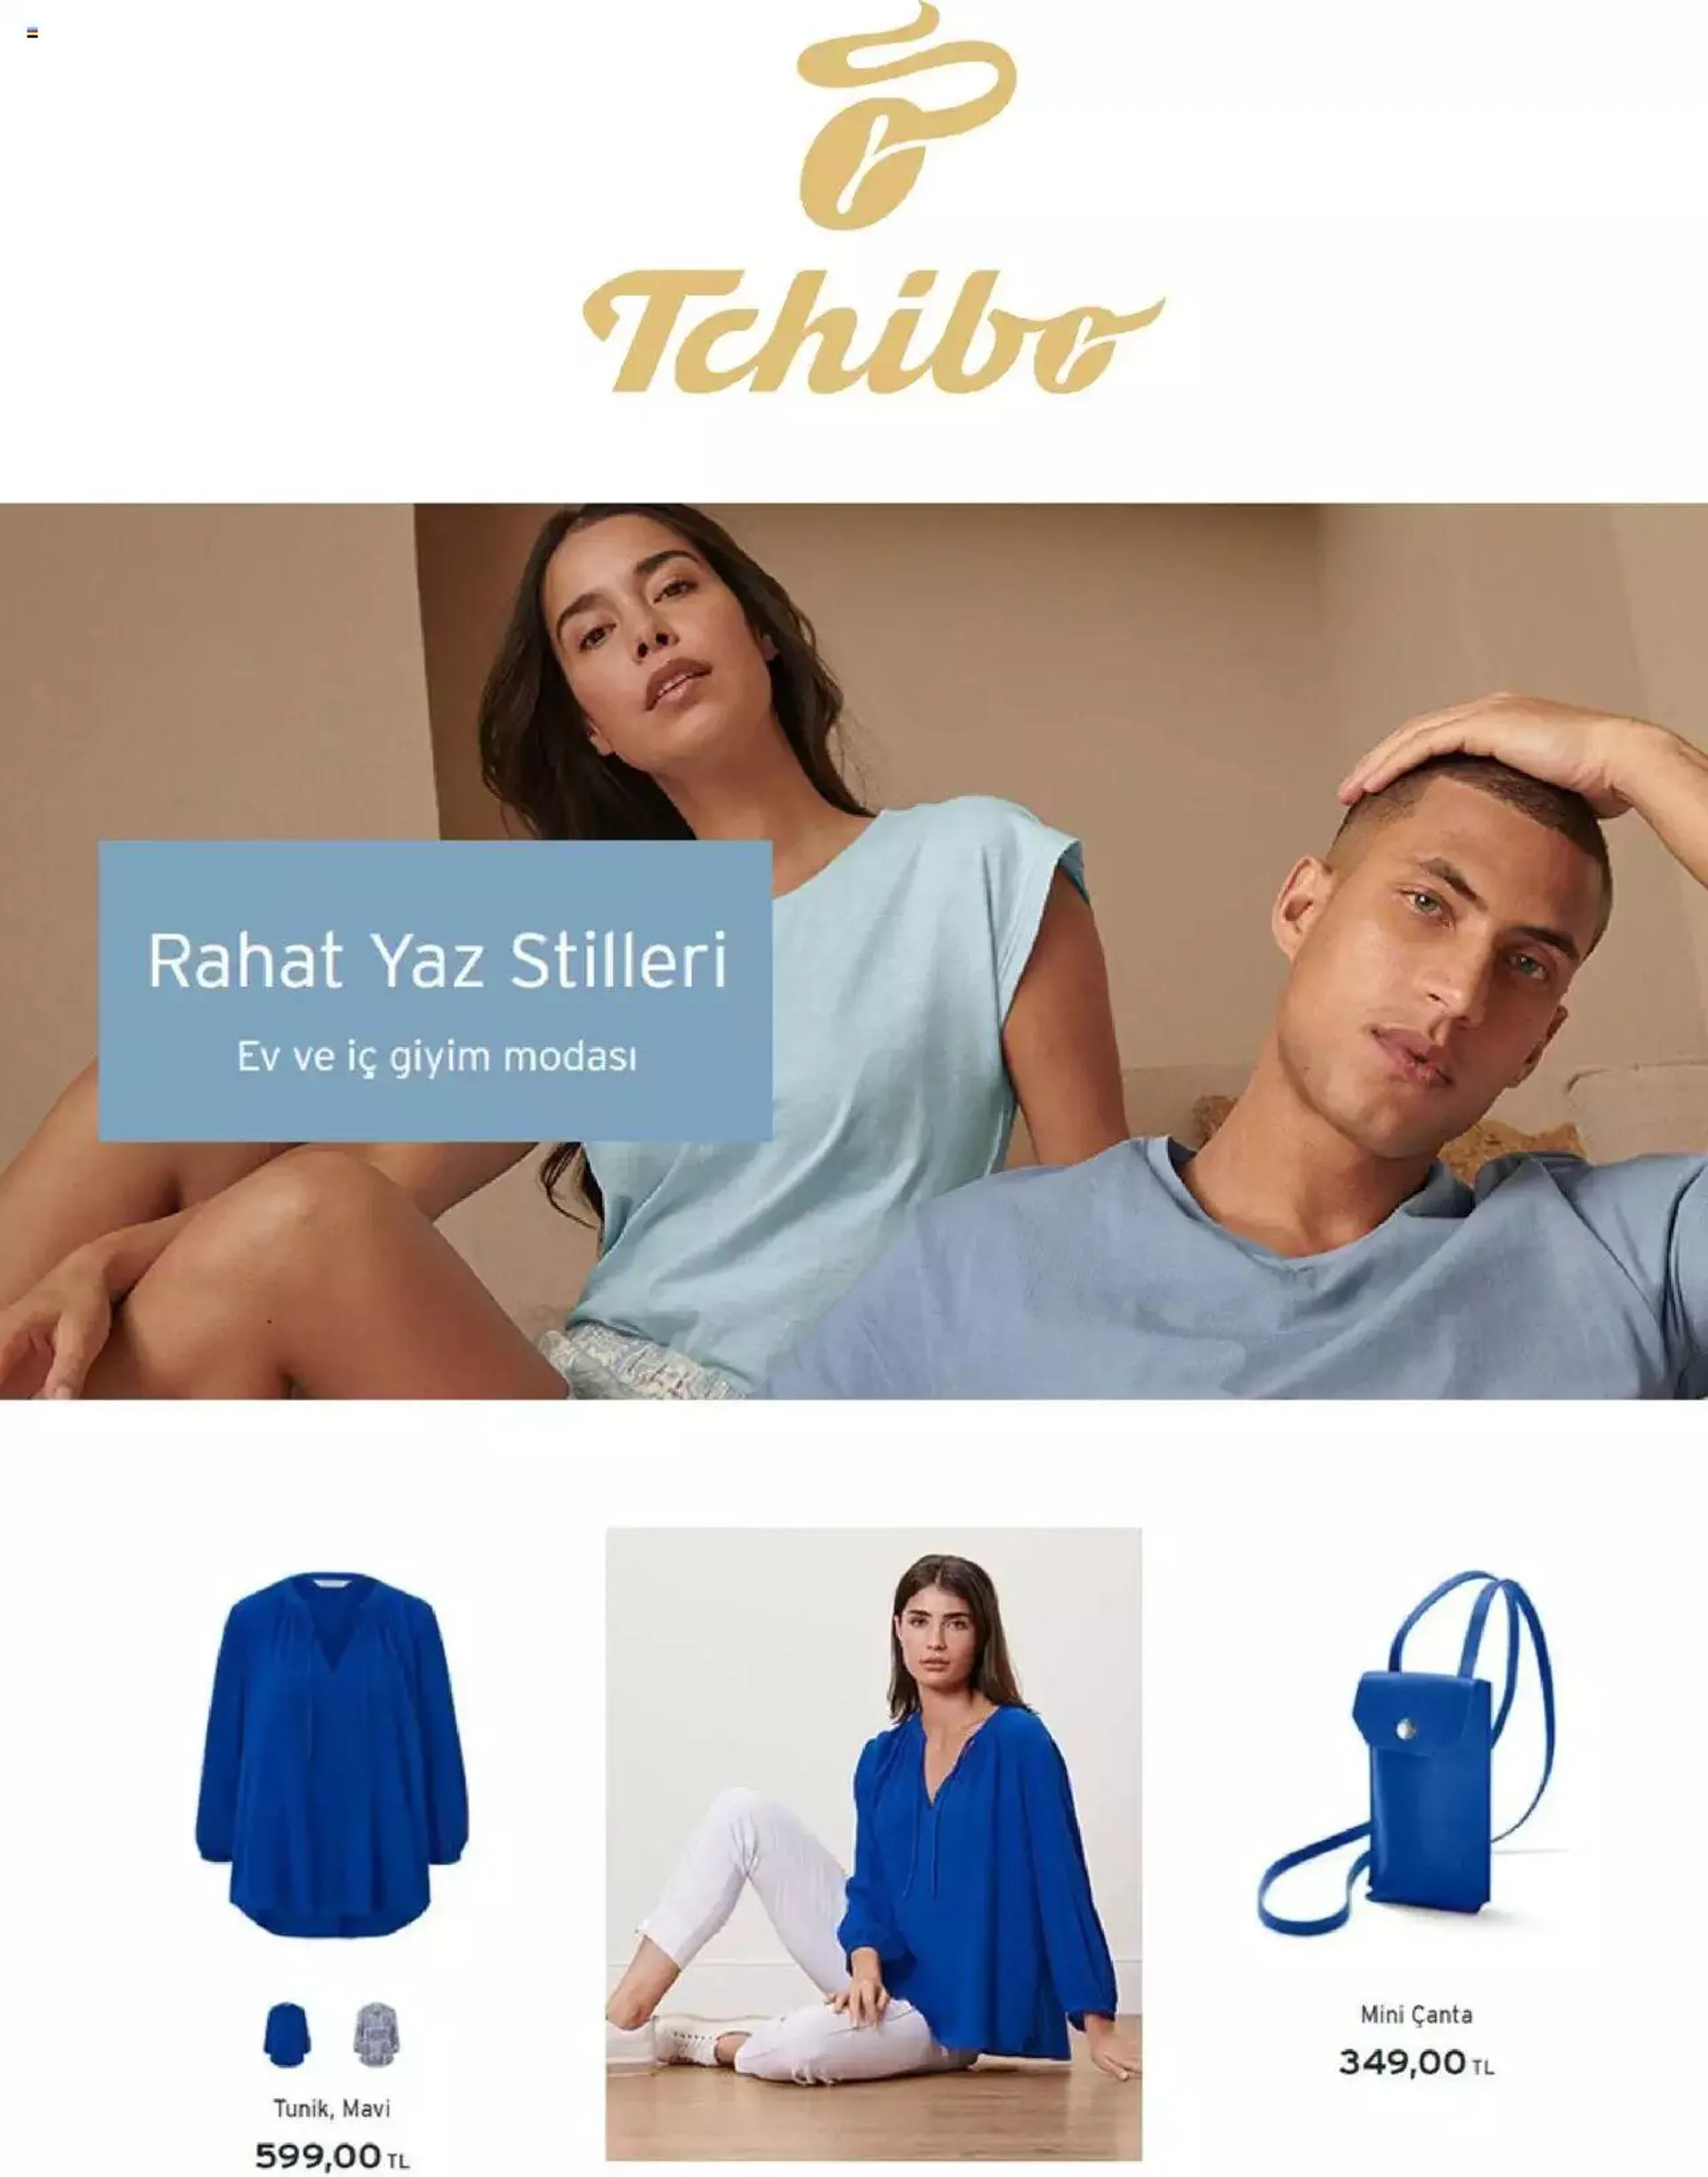 Tchibo Katalog